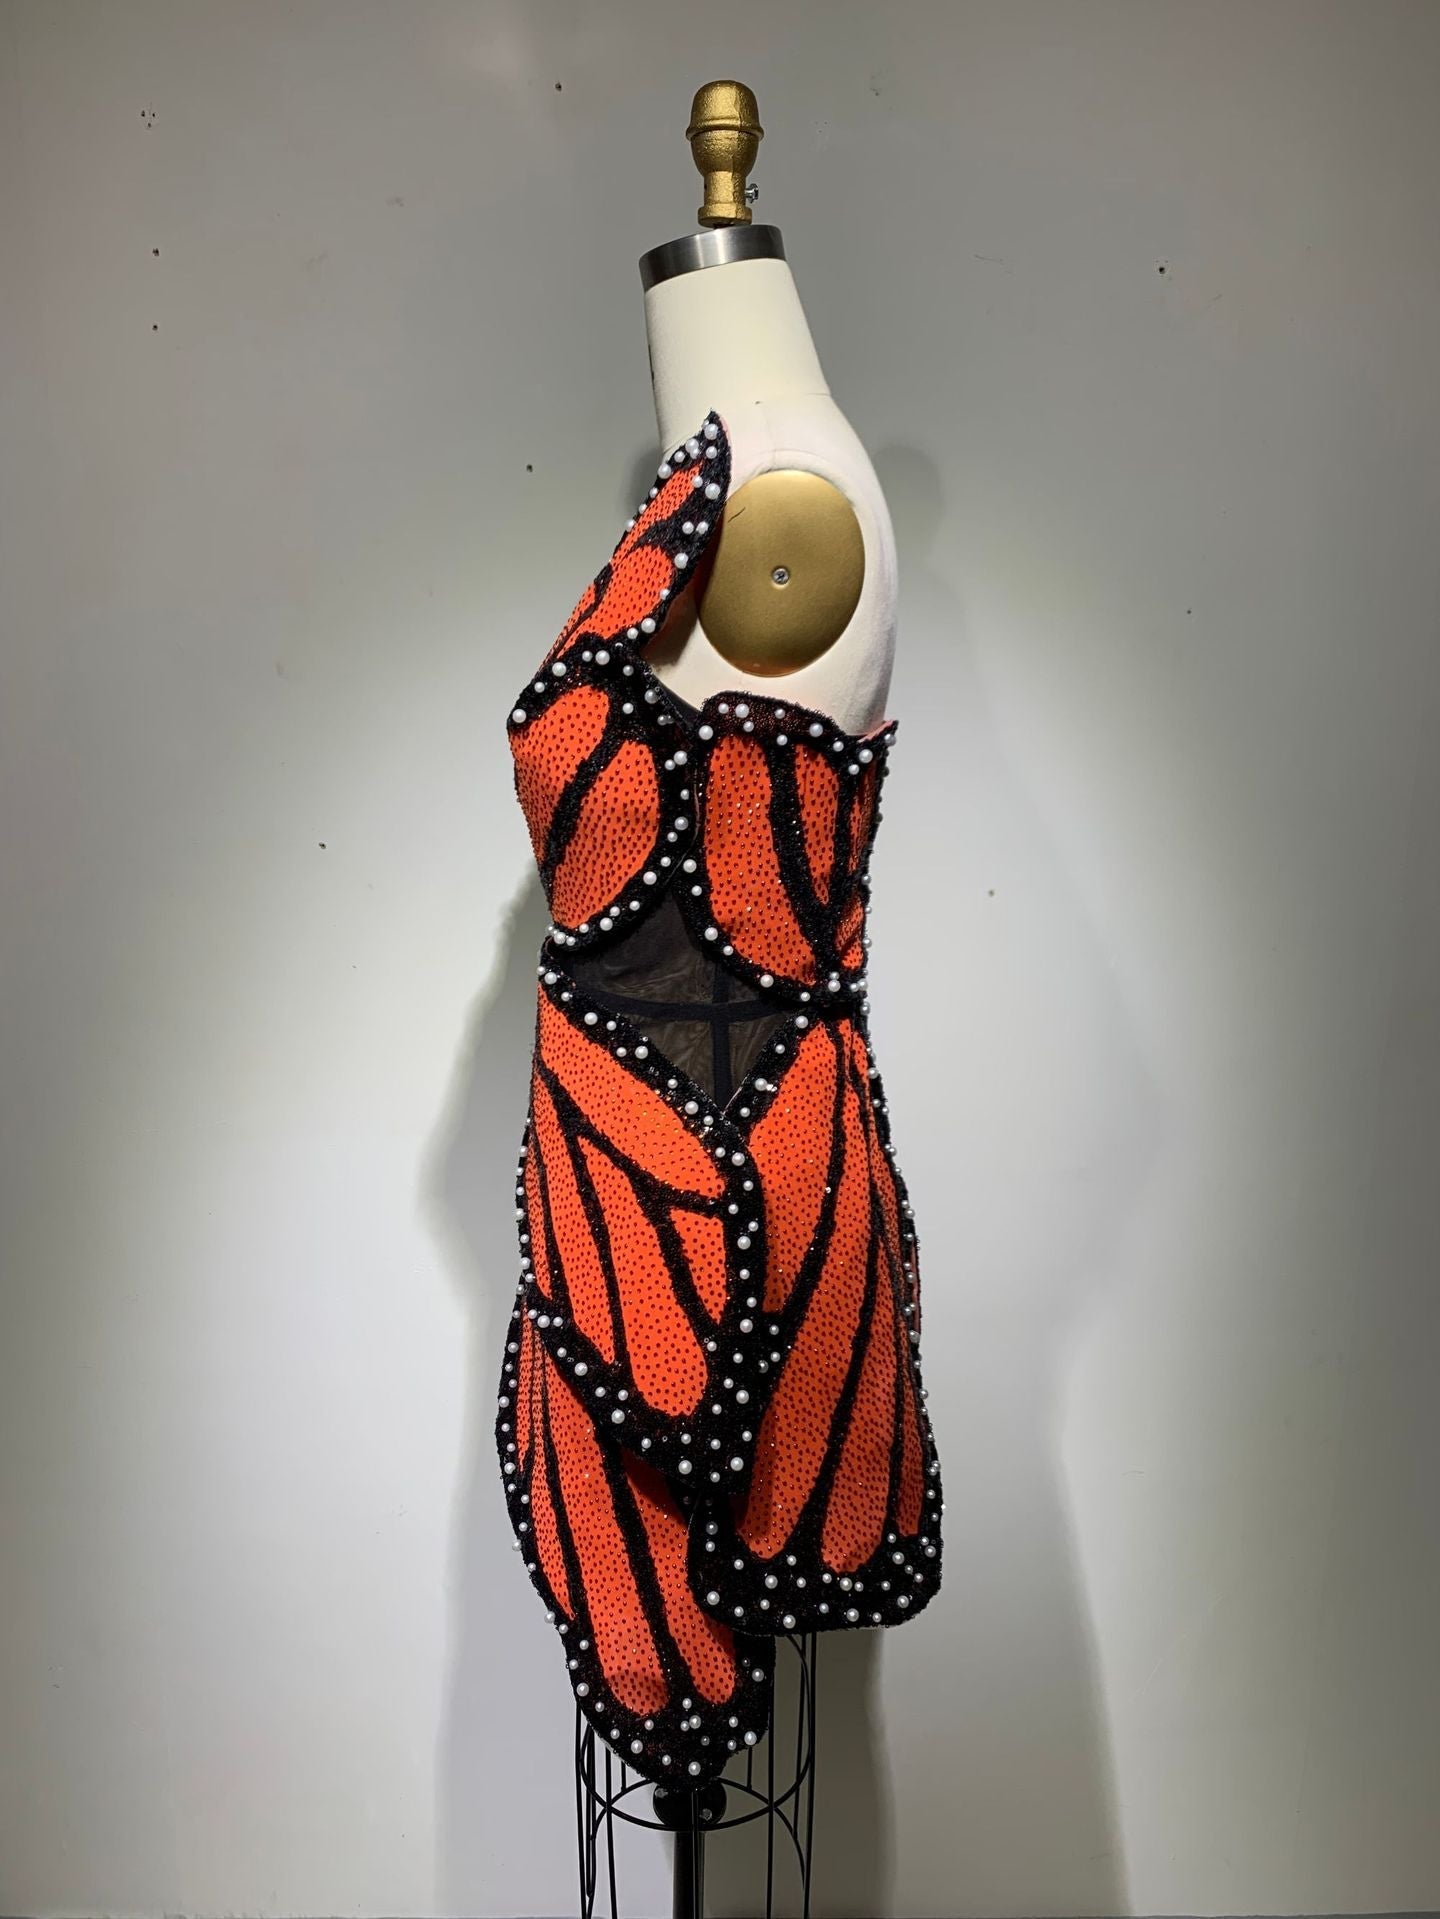 Butterfly Sequined Mini Dress - Kelly Obi New York